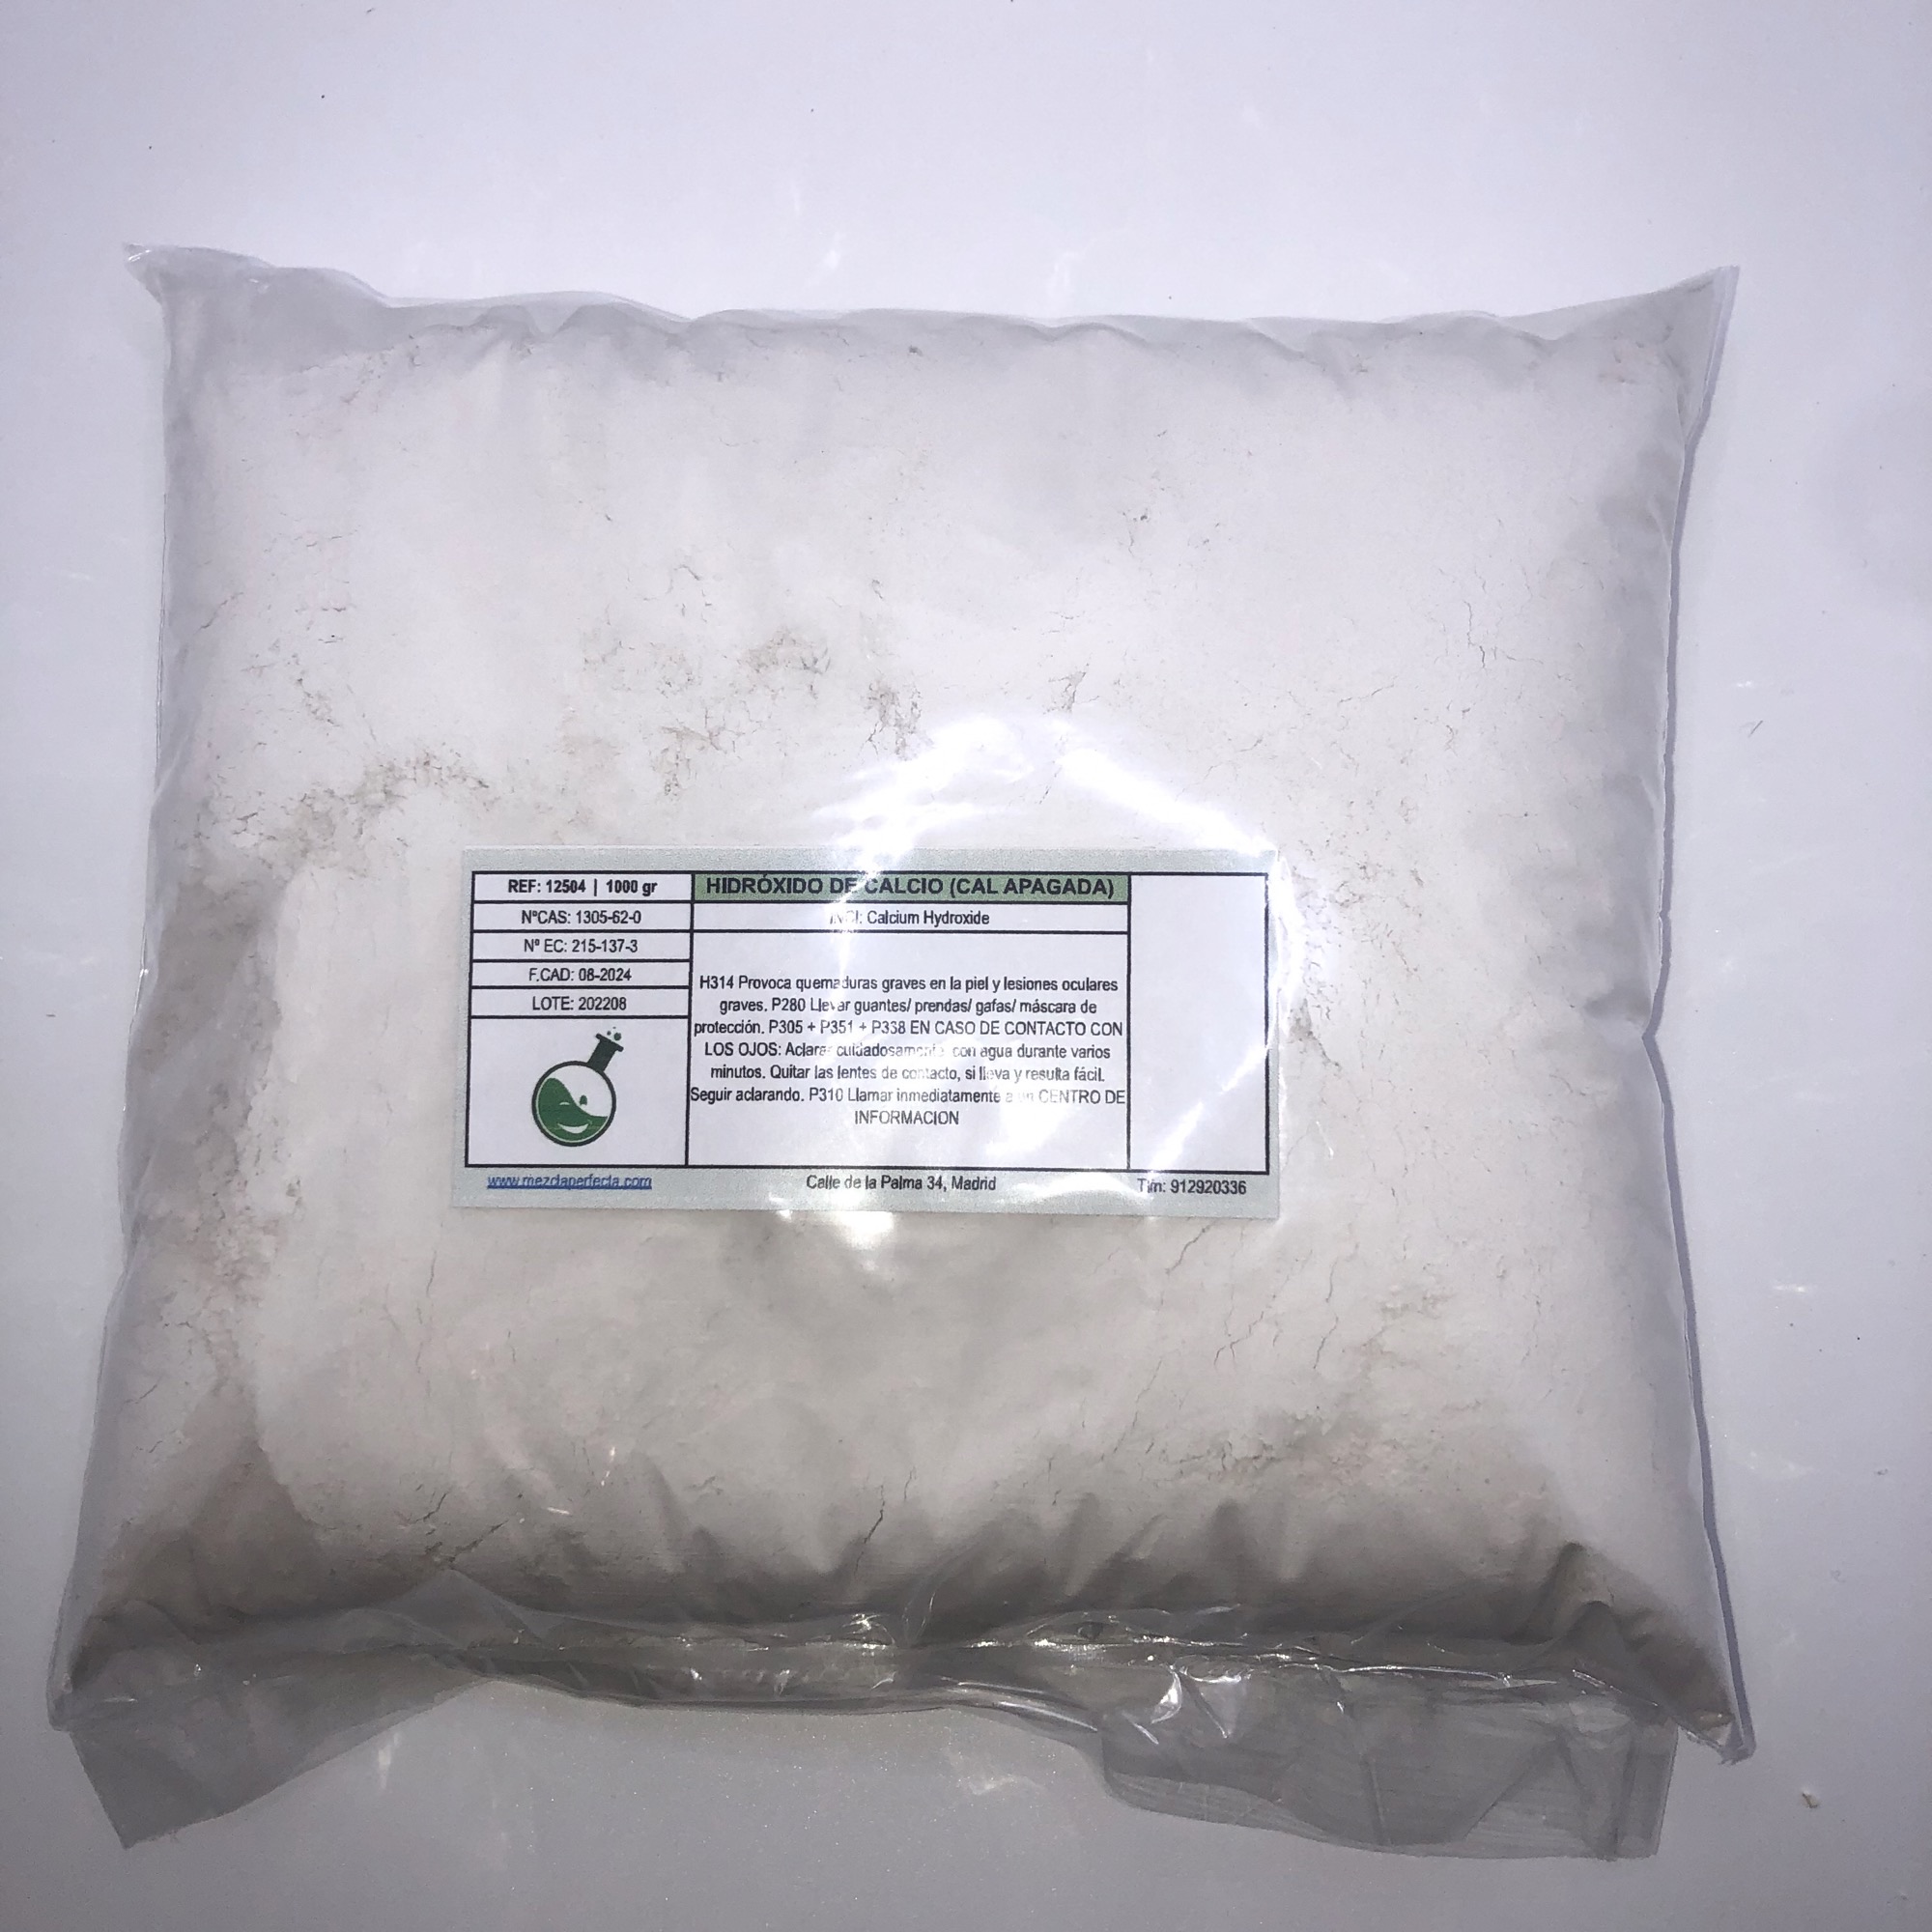 Cal hidratada, cal apagada (hidróxido de calcio) - Galvanoquímica® Mexicana